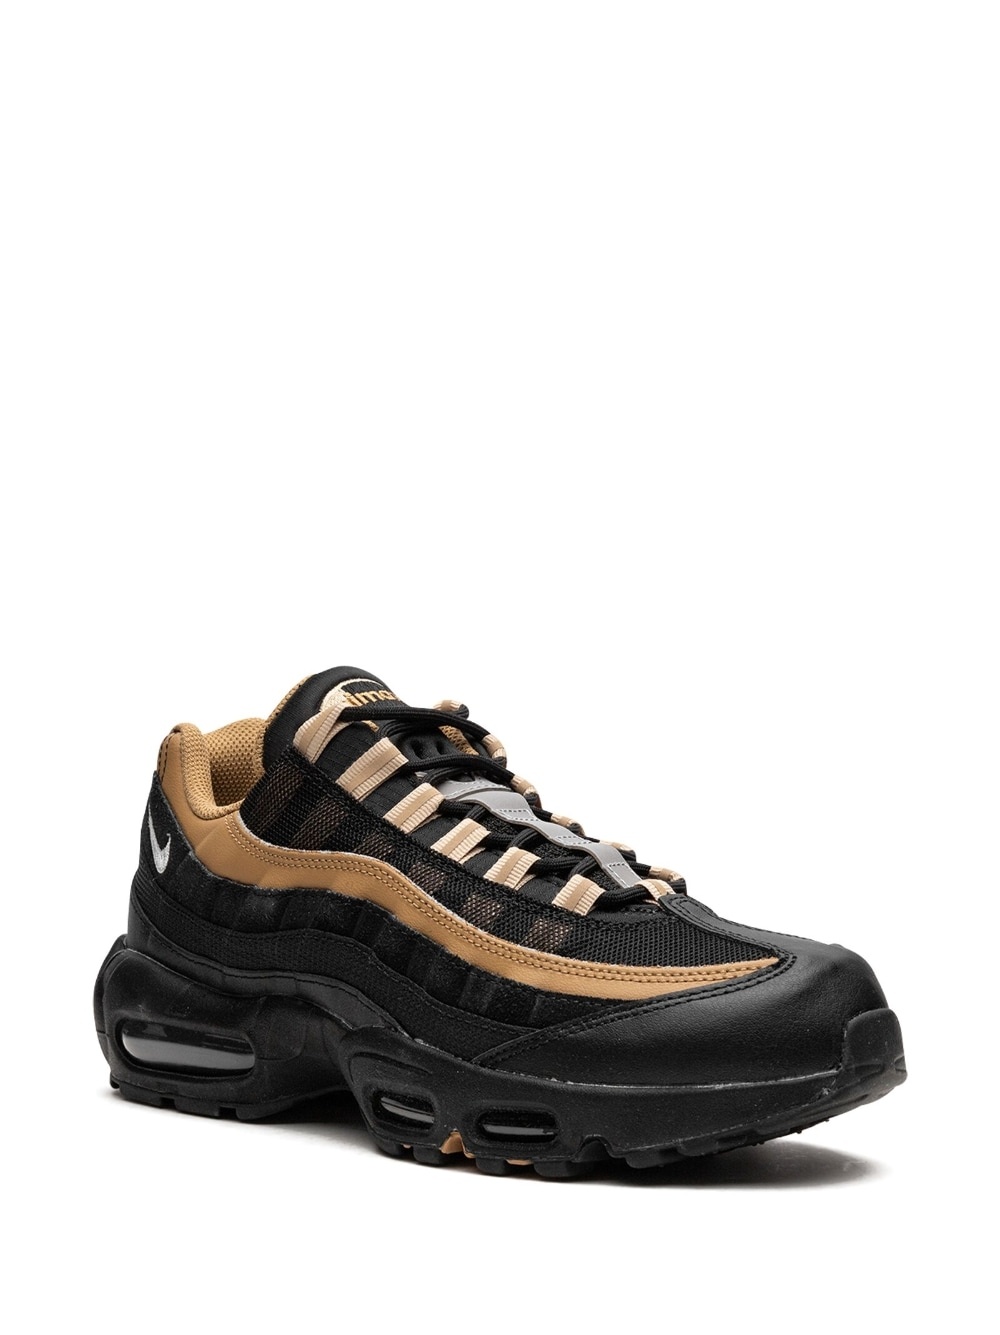 Air Max 95 "Black Elemental Gold" sneakers - 2